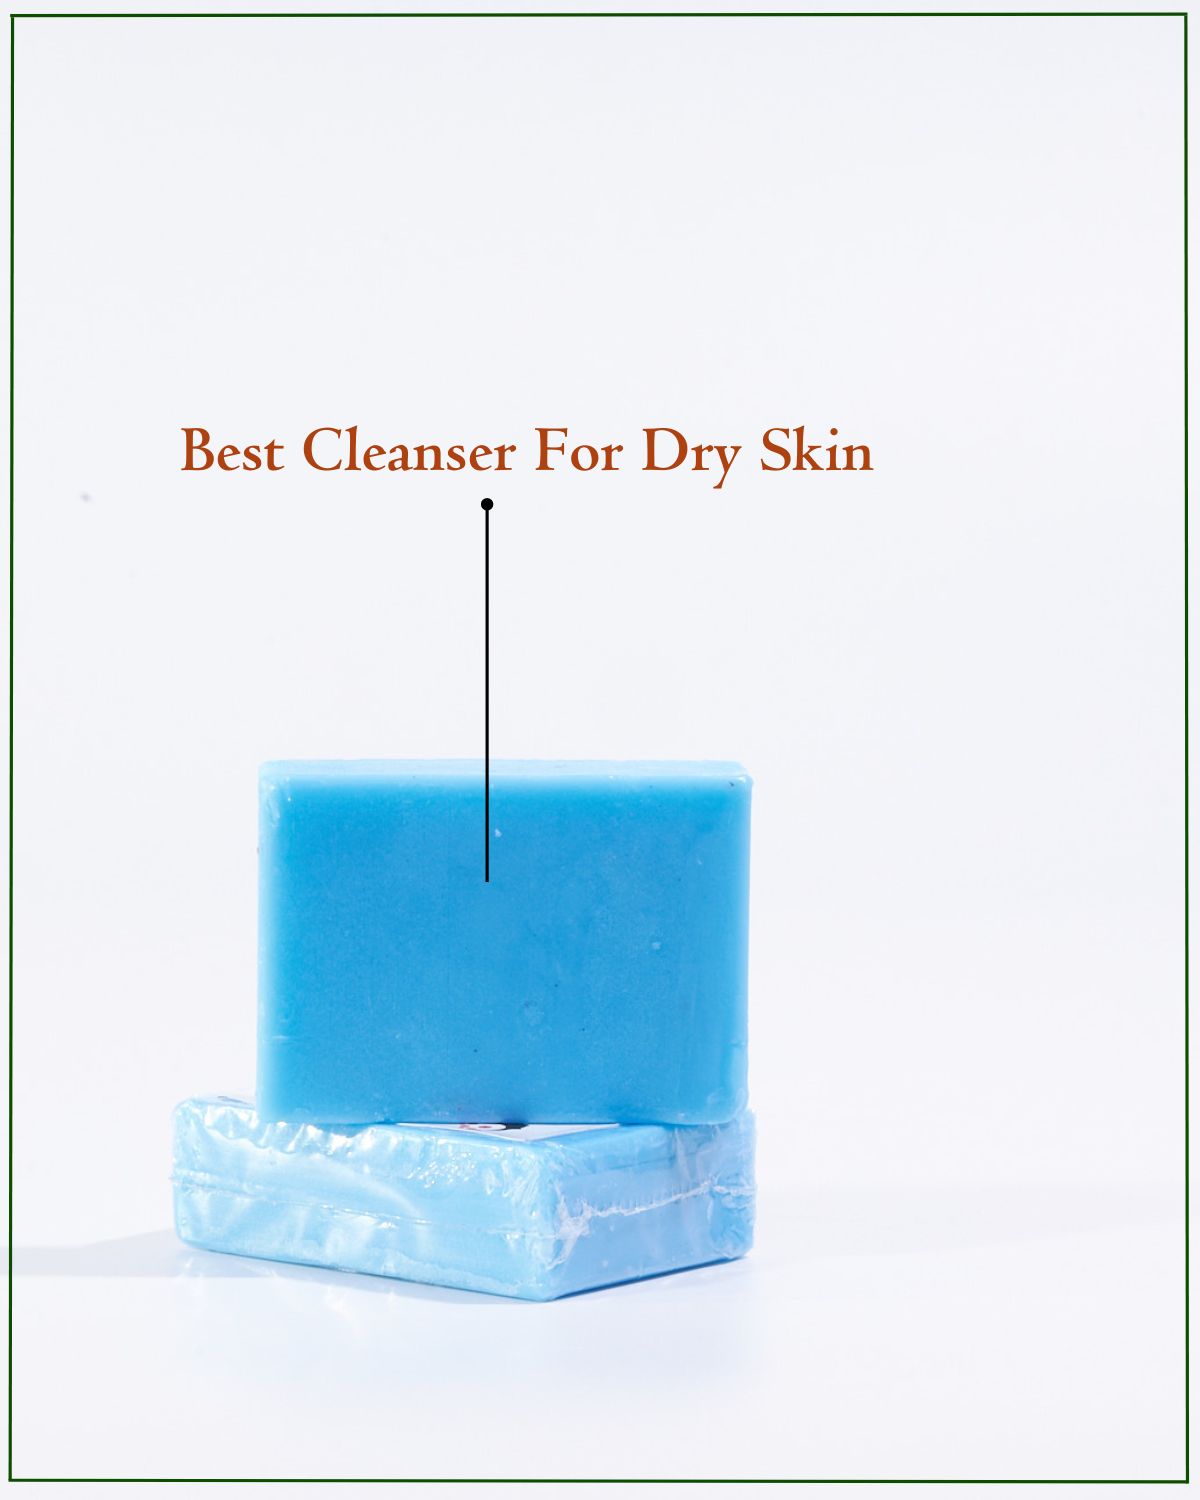 soap for dry skin